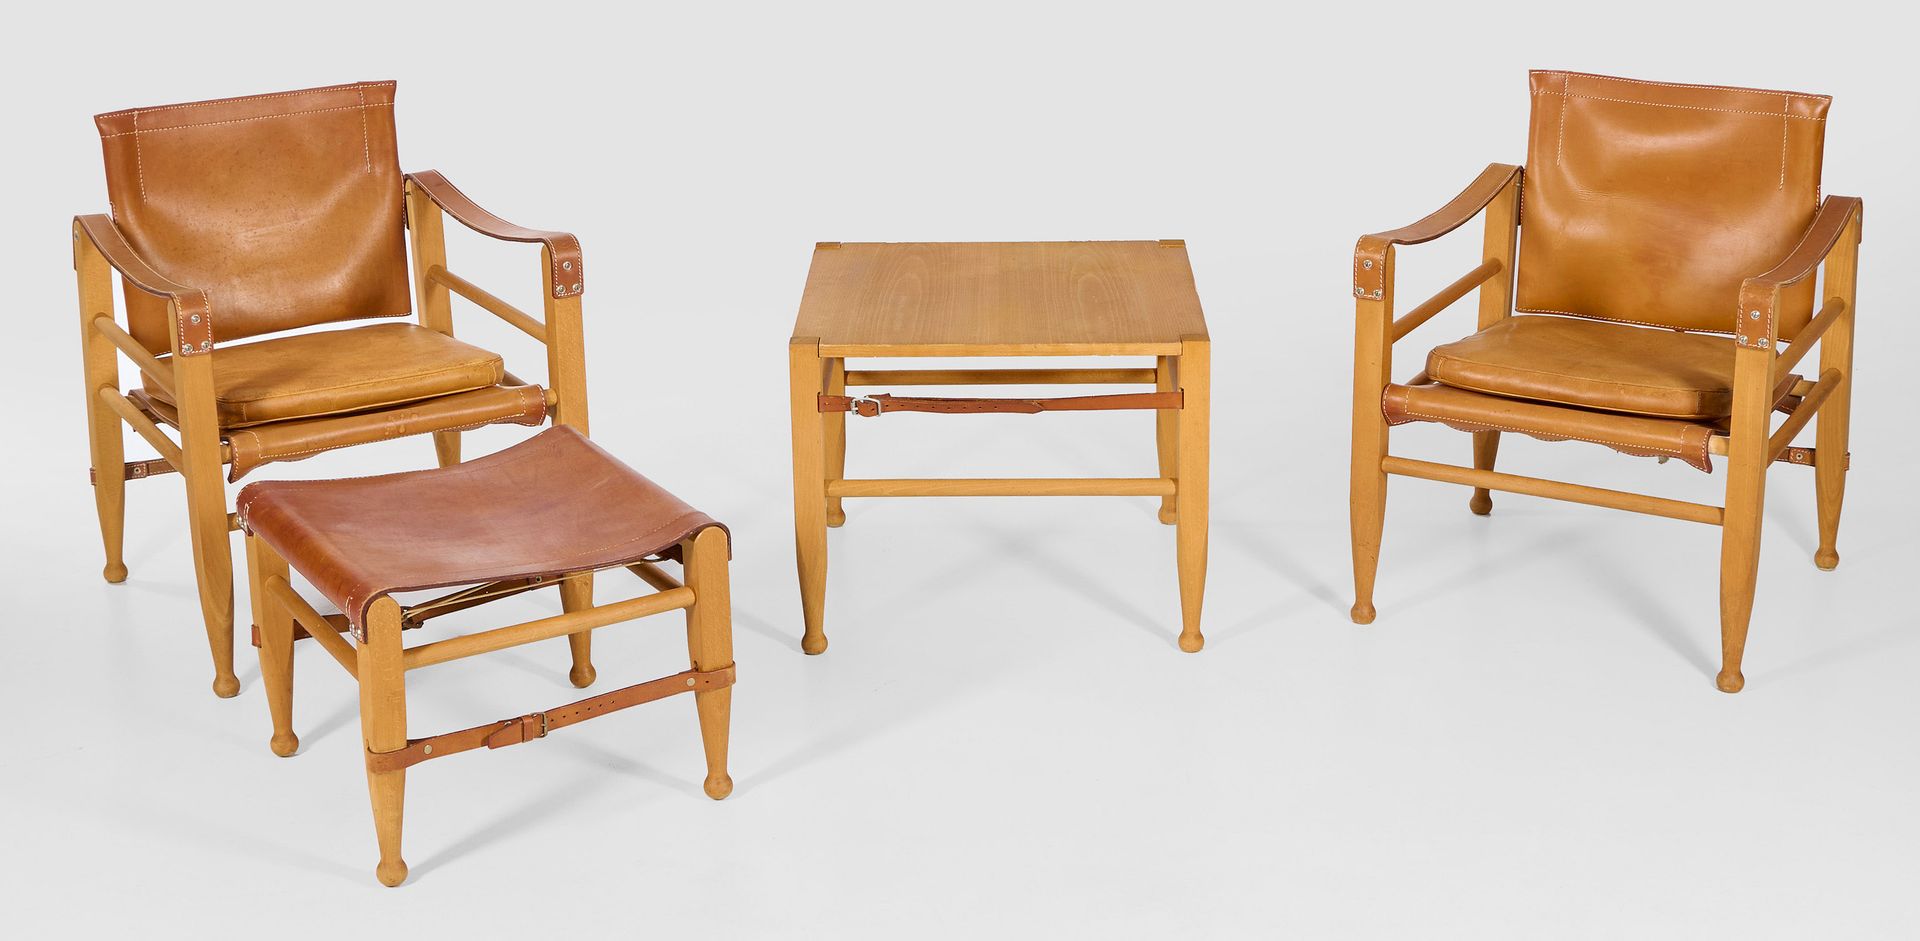 Null Aage Bruun & Søn 设计的 "Safari "家具套装，共 4 件；一对扶手椅、凳子和桌子。榉木和浅棕色芯皮。框架由折叠式支柱和带带状扶&hellip;